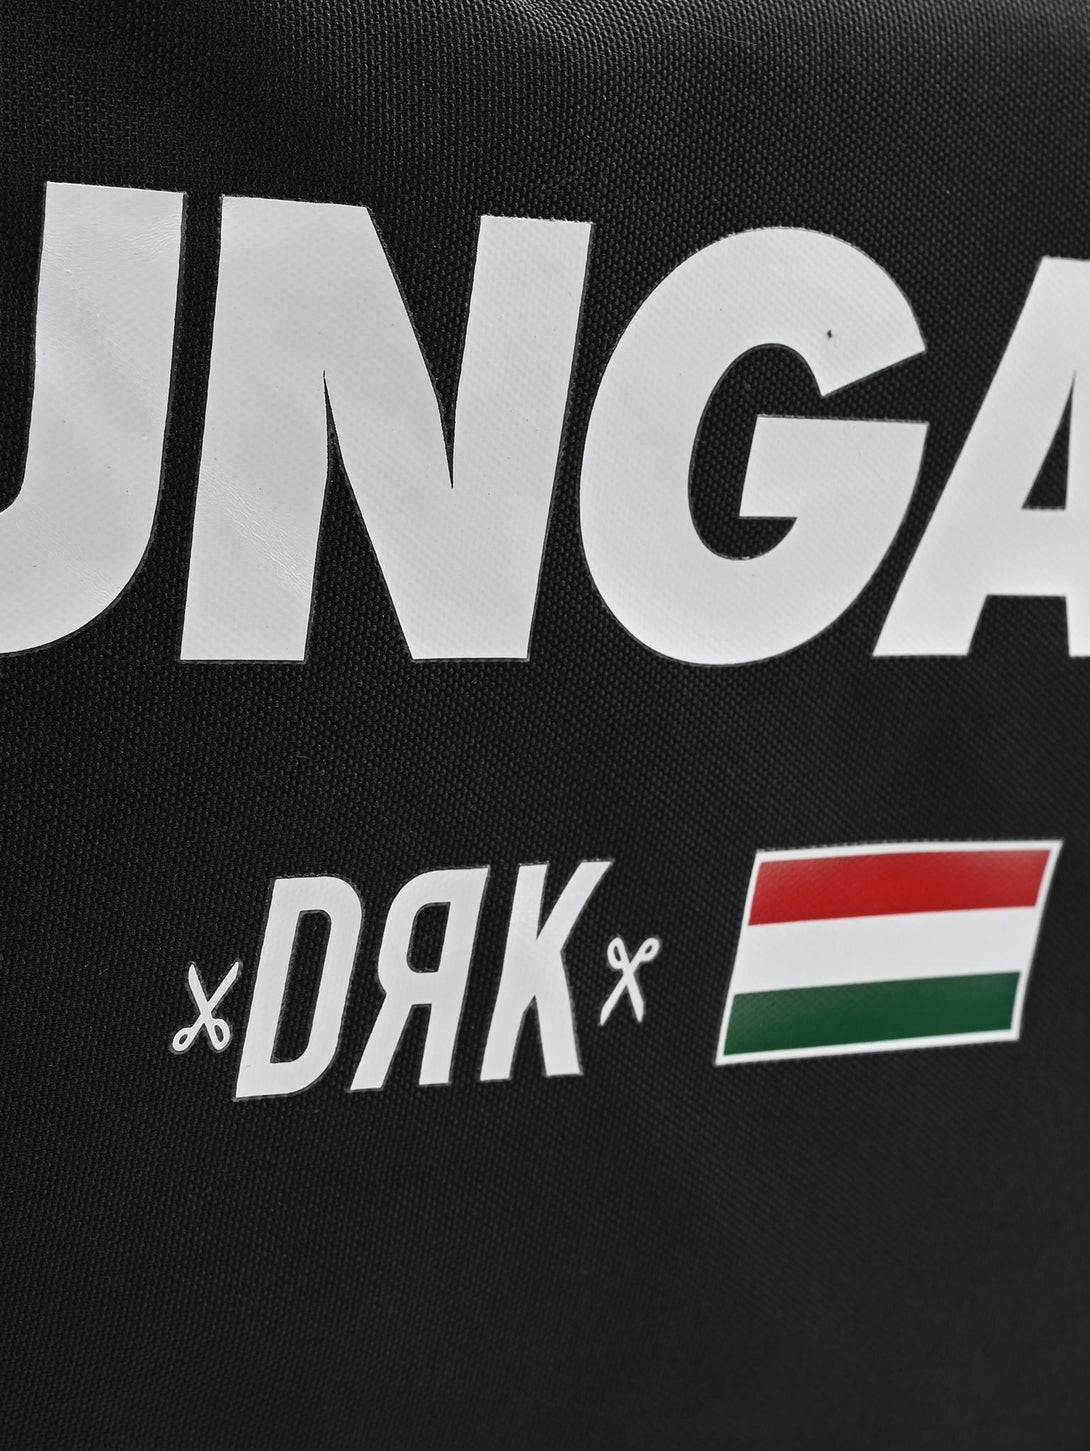 HUNGARY DUFFLE BAG LARGE - Sportmania.hu